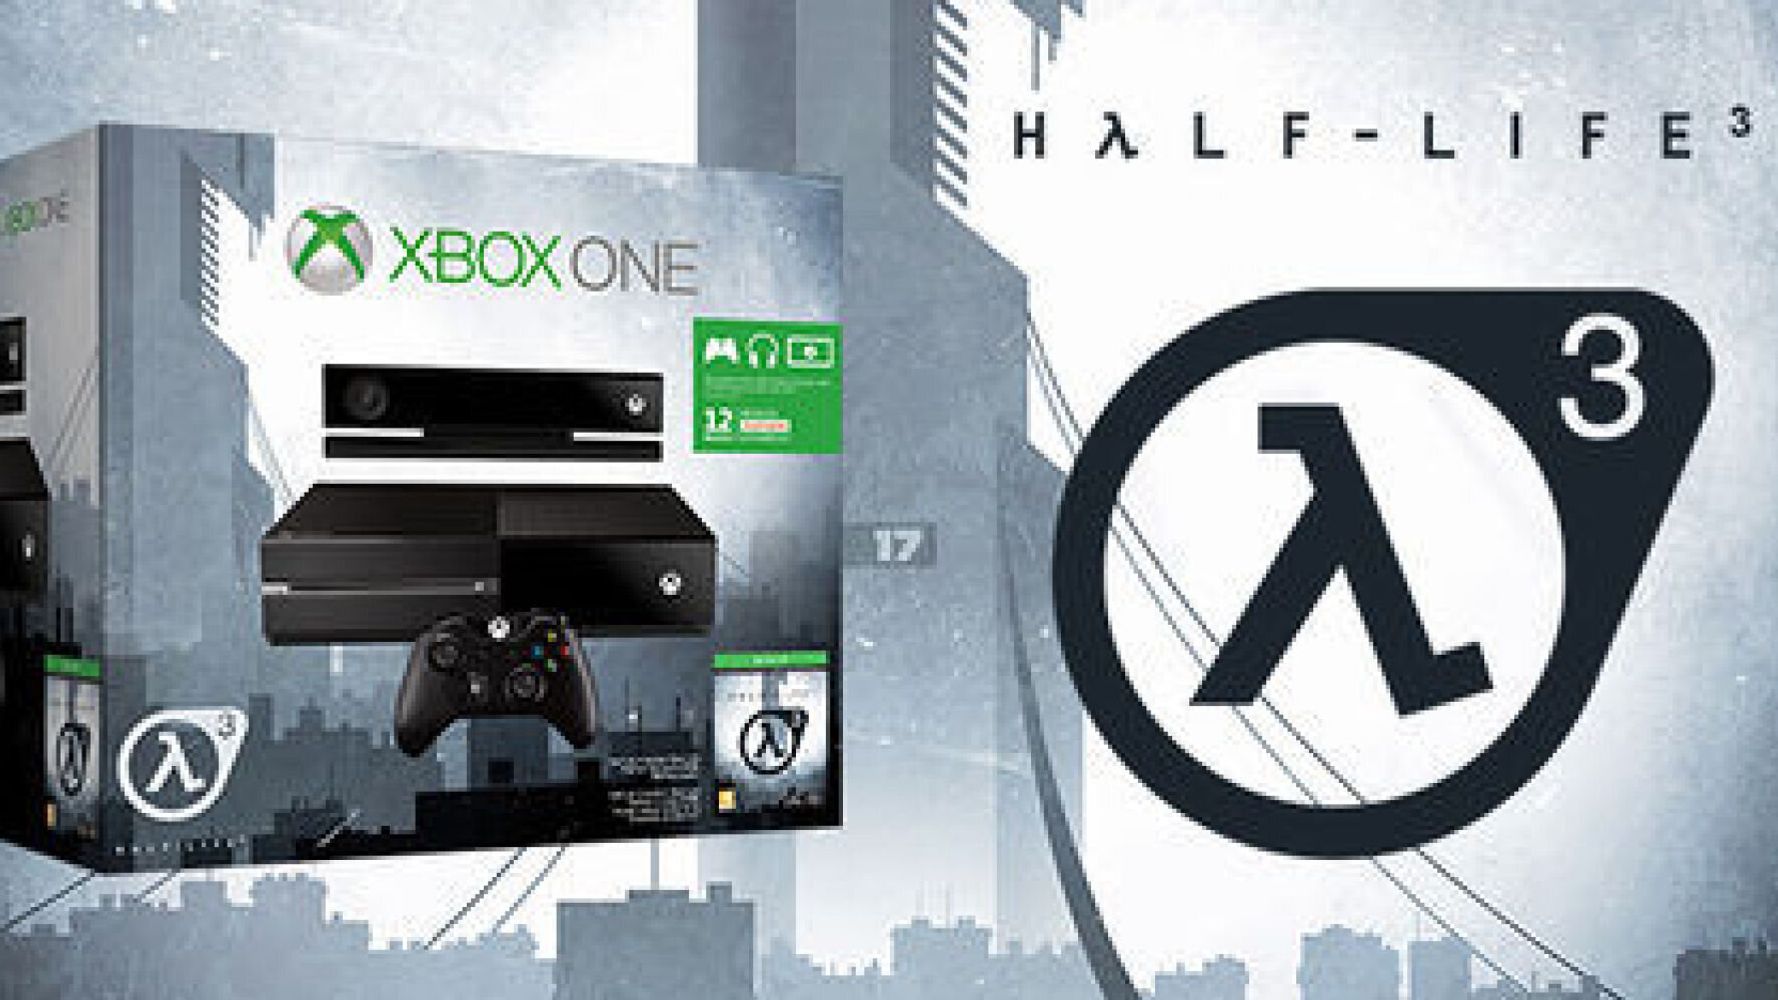 Life 3 box. Half Life Xbox. Хбокс лайф. Half Life Xbox 360. Hl3.